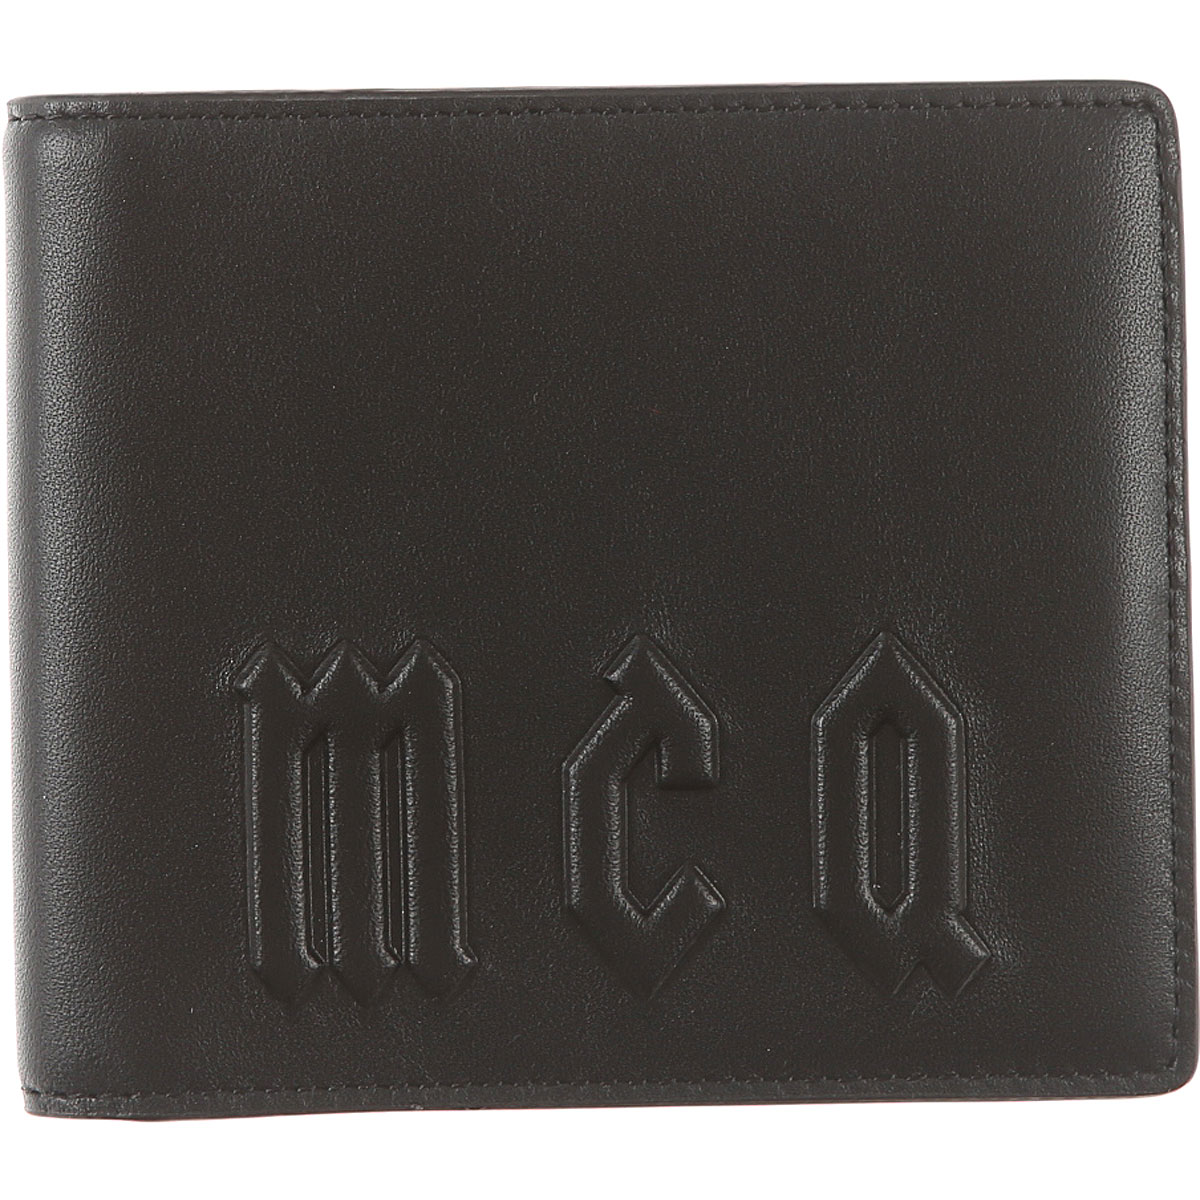 mcq wallet